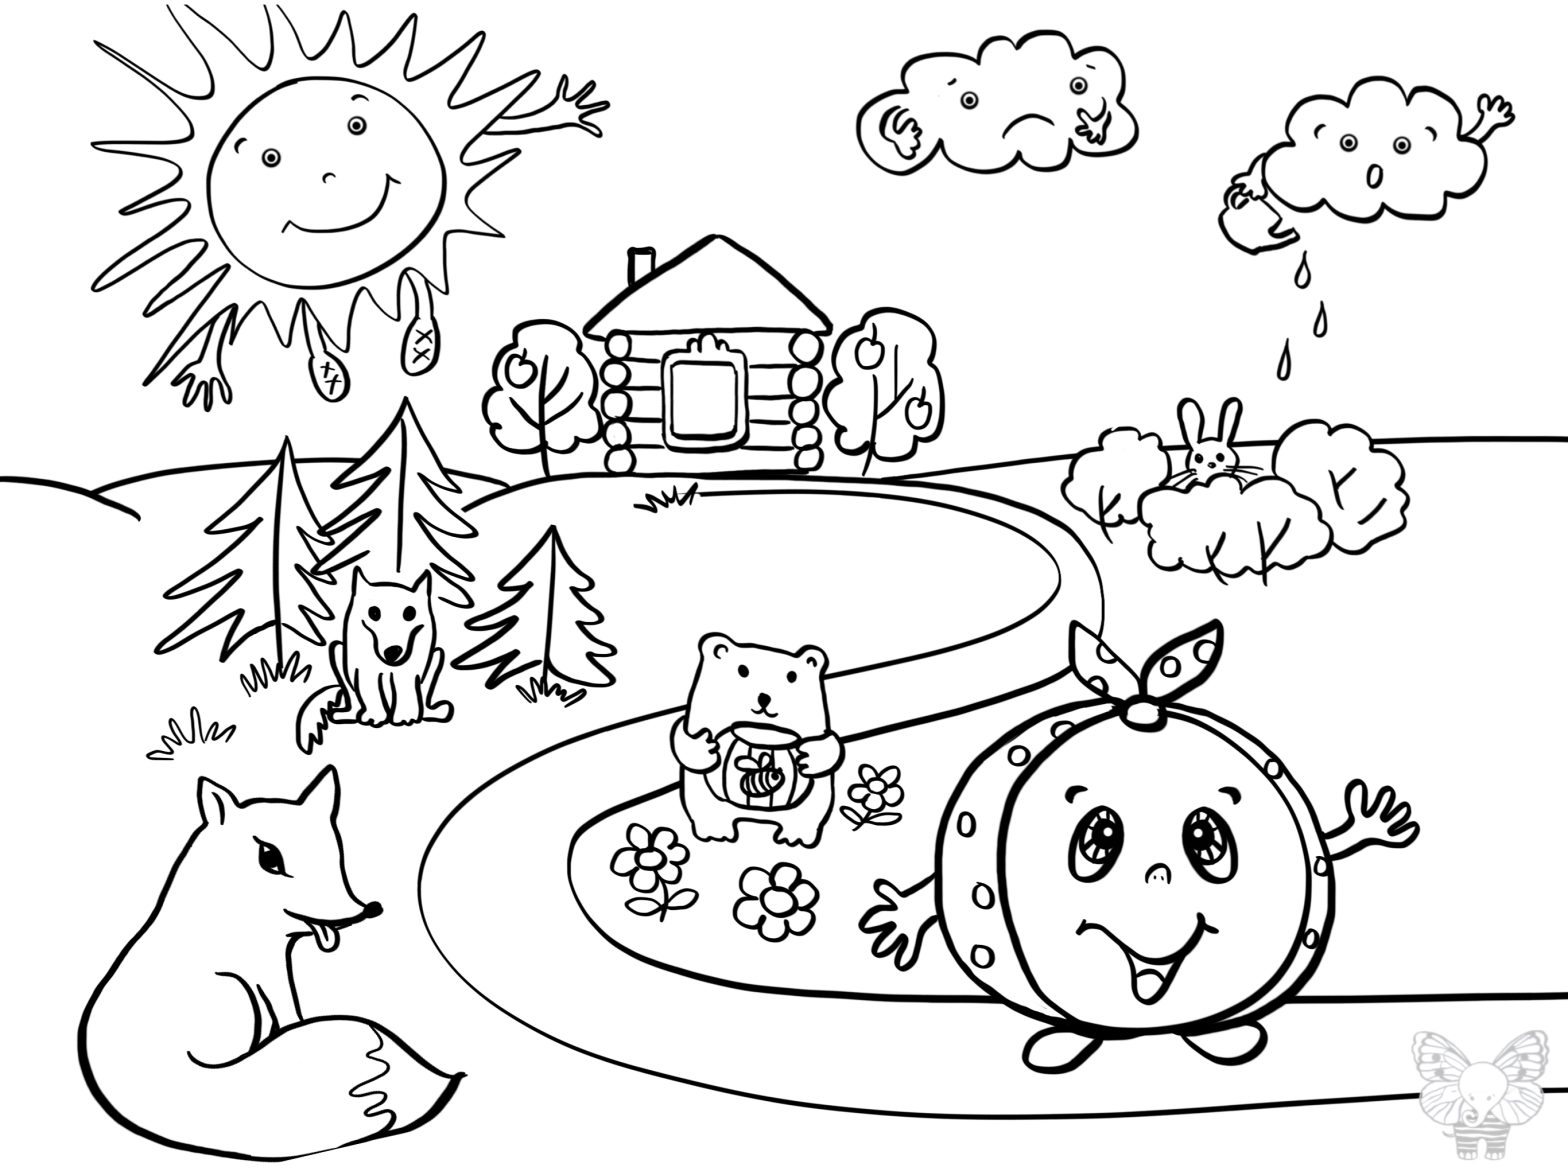 Раскраски с героями сказки Колобок для детей (колобок, лиса, заяц, волк, бабка)